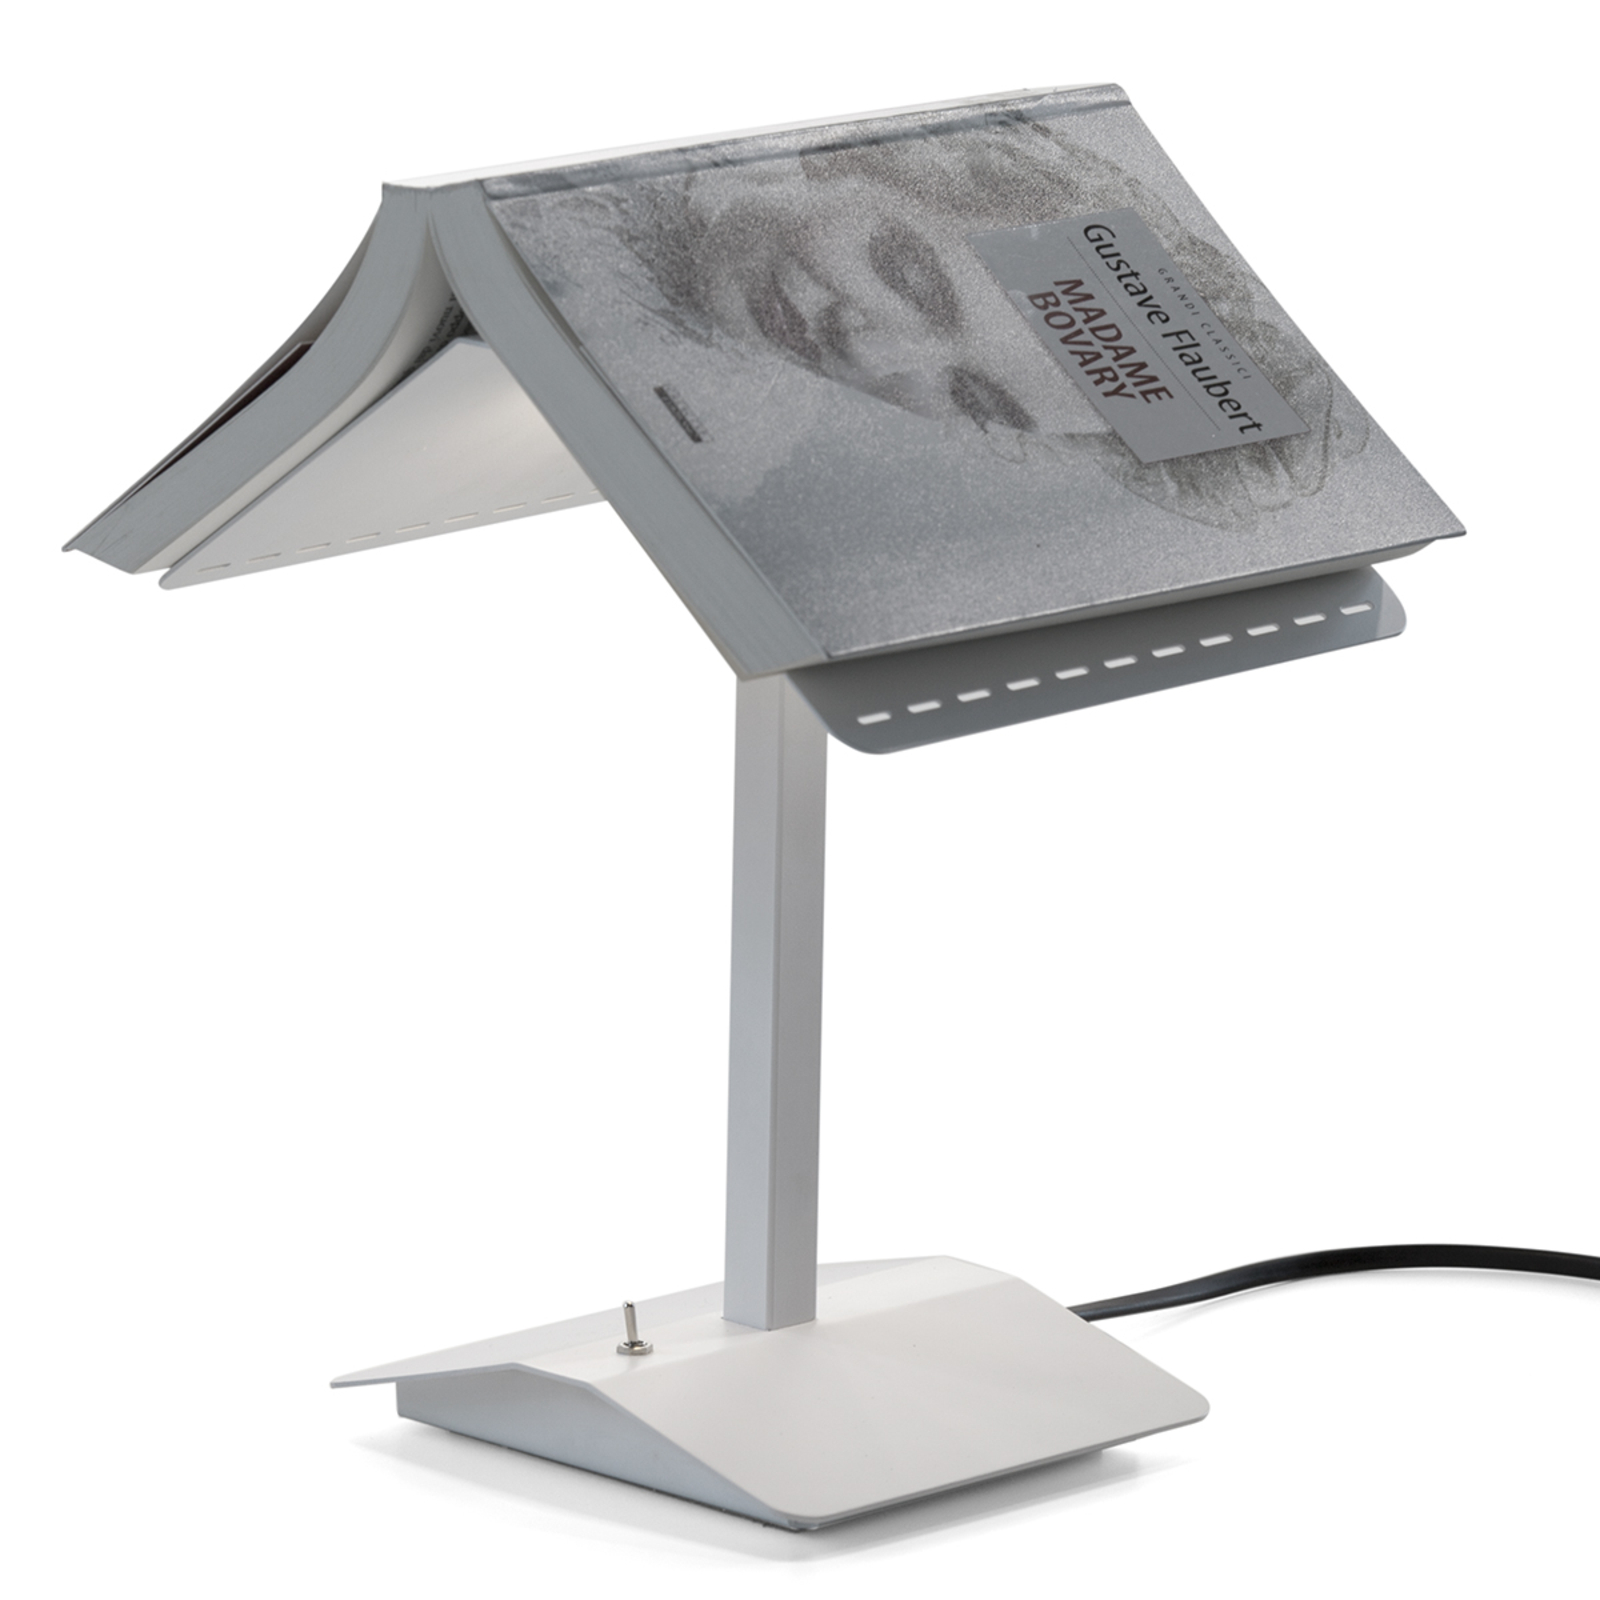 Martinelli Luce Segnalibro - LED table lamp